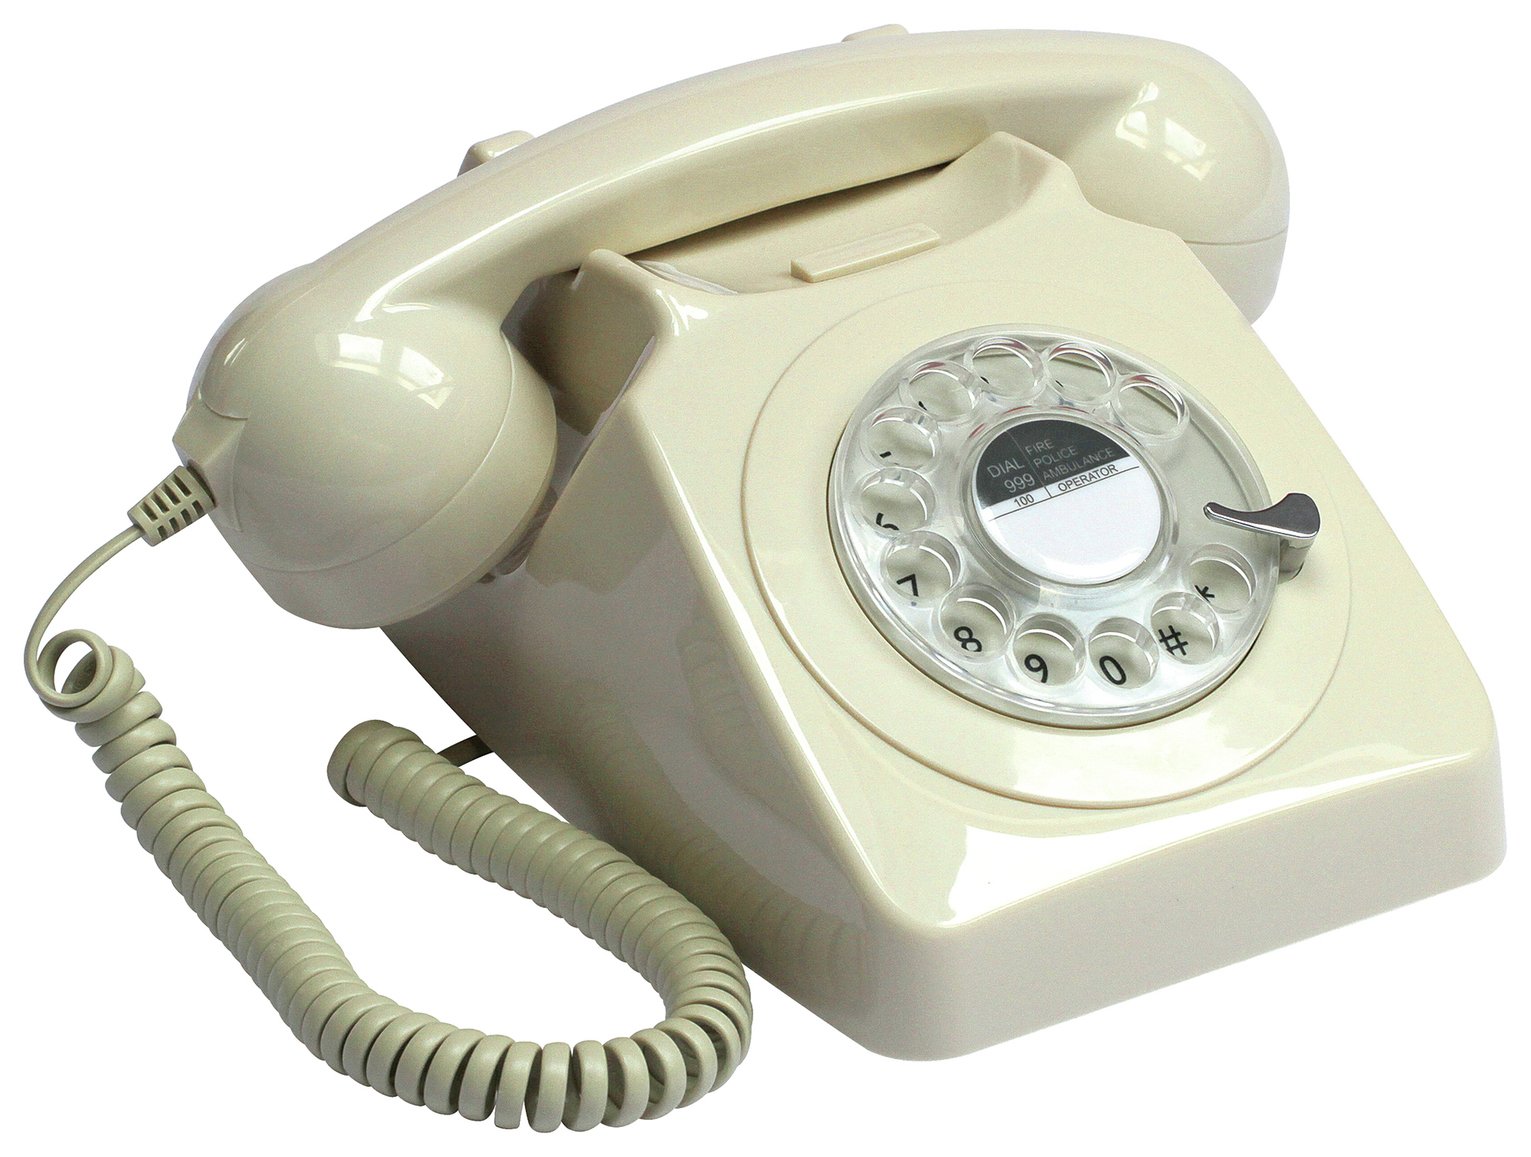 Старый стационарный телефон. Ретро телефон GPO 746 Rotary. Телефонный аппарат. Телефонный аппарат стационарный. Телефонный аппарат стационарный дисковый.